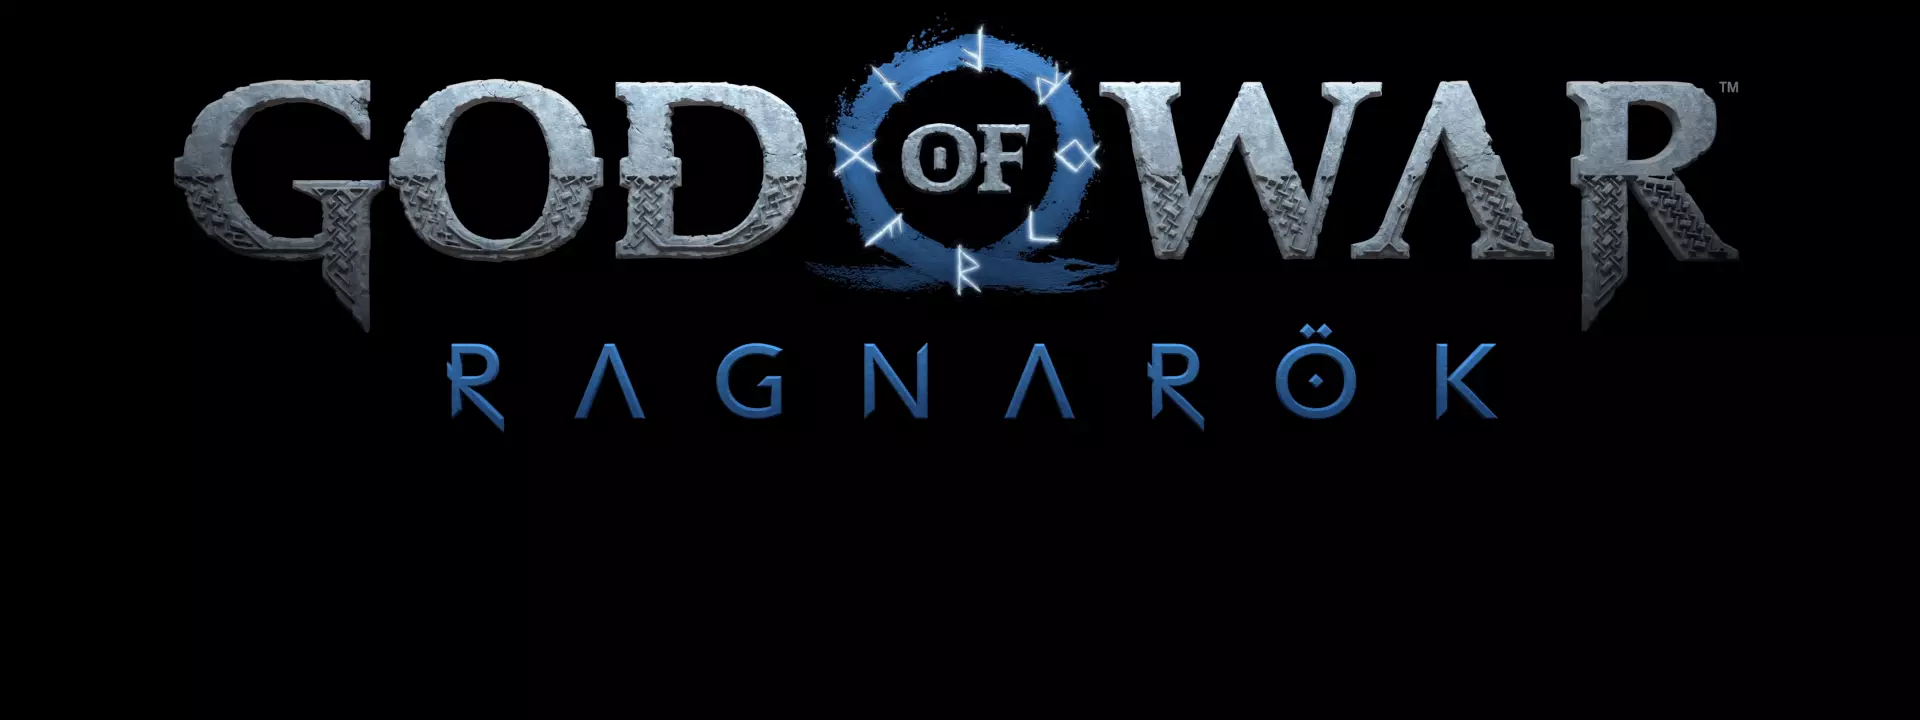 God of War Ragnarök - приключенческая игра, разработанная студией Santa Monica Studio и изданная Sony Interactive Entertainment (SIE).